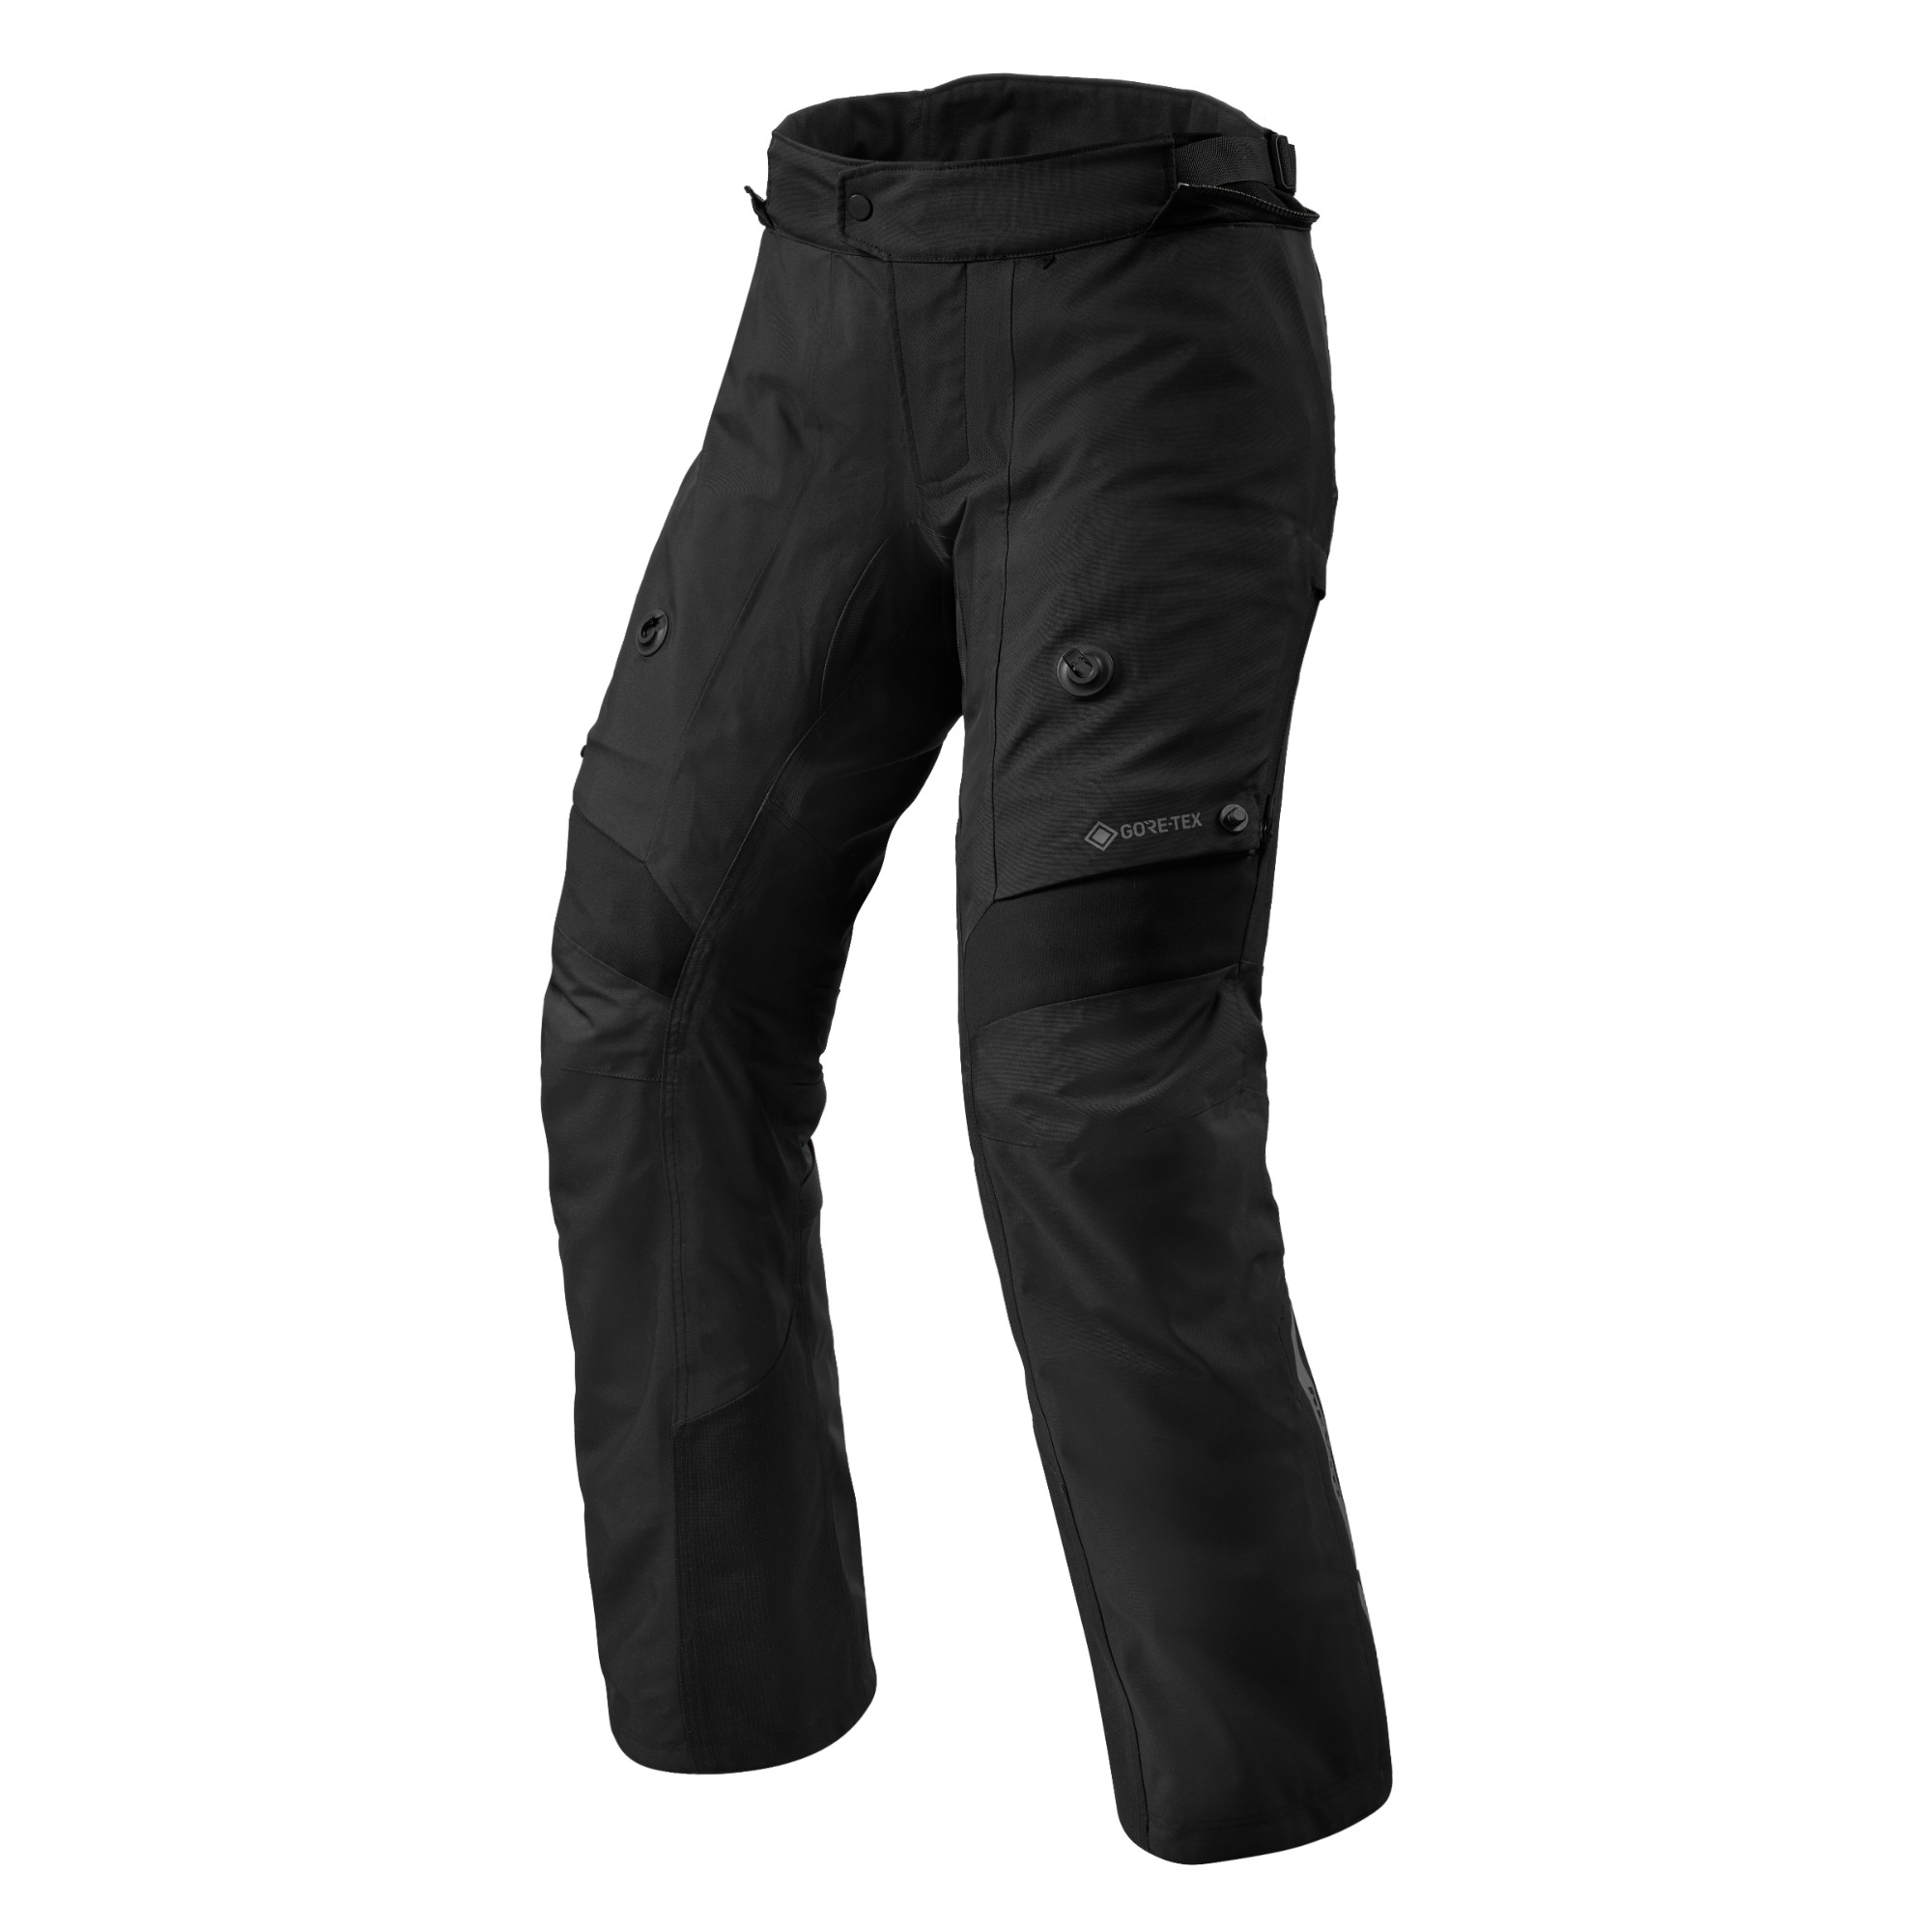 Image of REV'IT! Pants Poseidon 3 GTX Black Short Motorcycle Pants Size 2XL EN